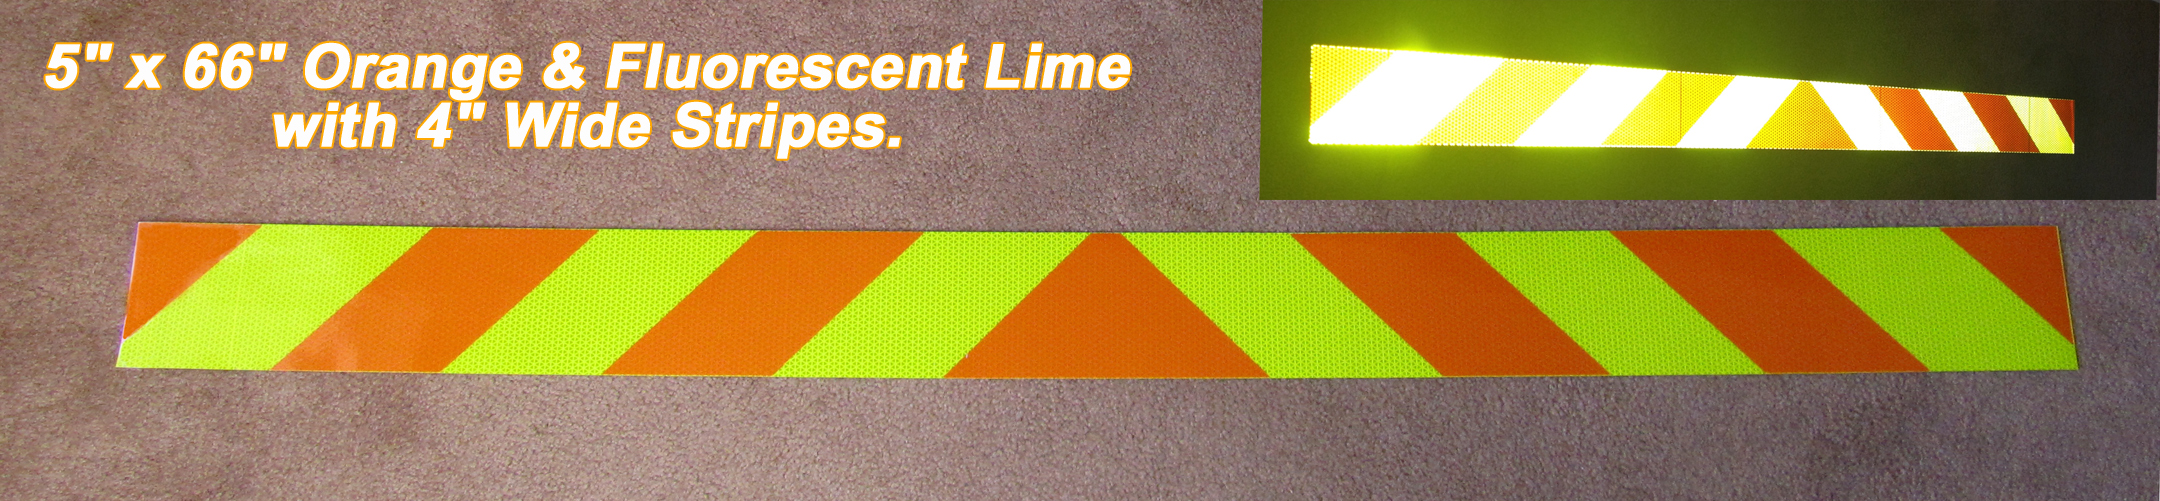 5" x 66" orange lime reflective panel